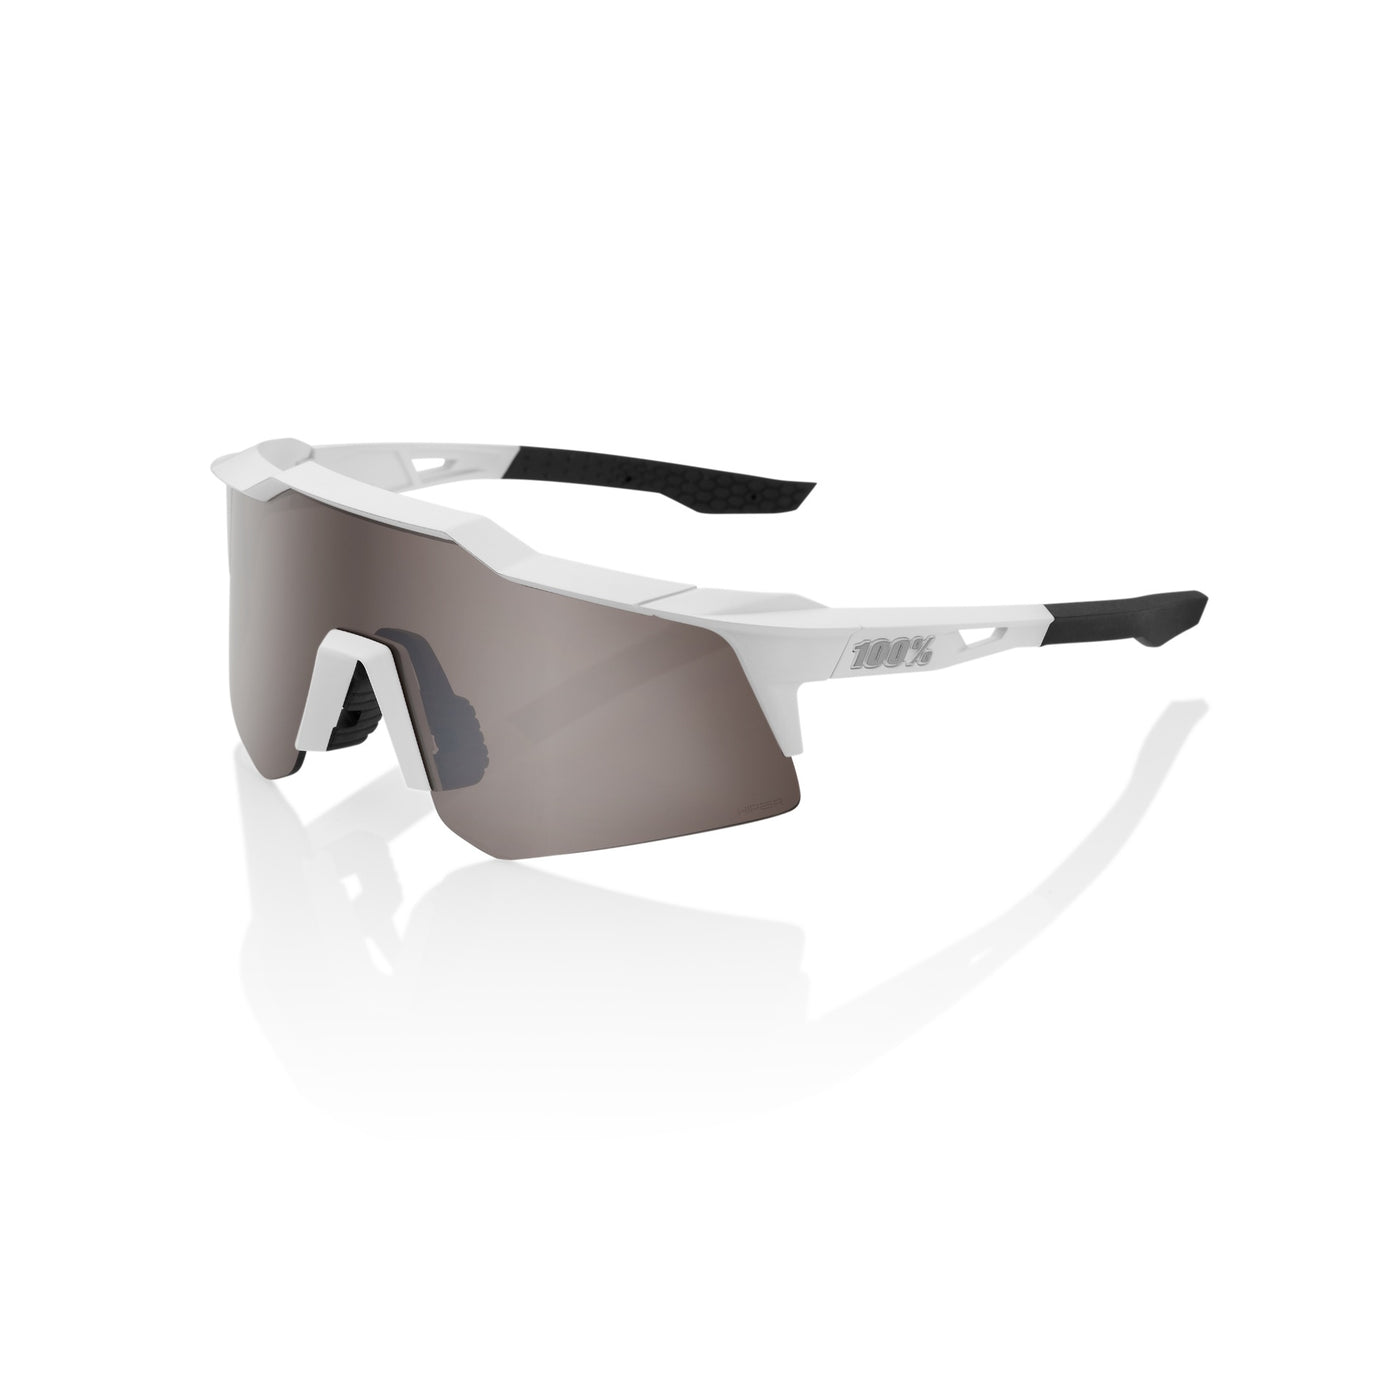 Sunglasses 100% Speedcraft XS - Matt White - Hiper Silver